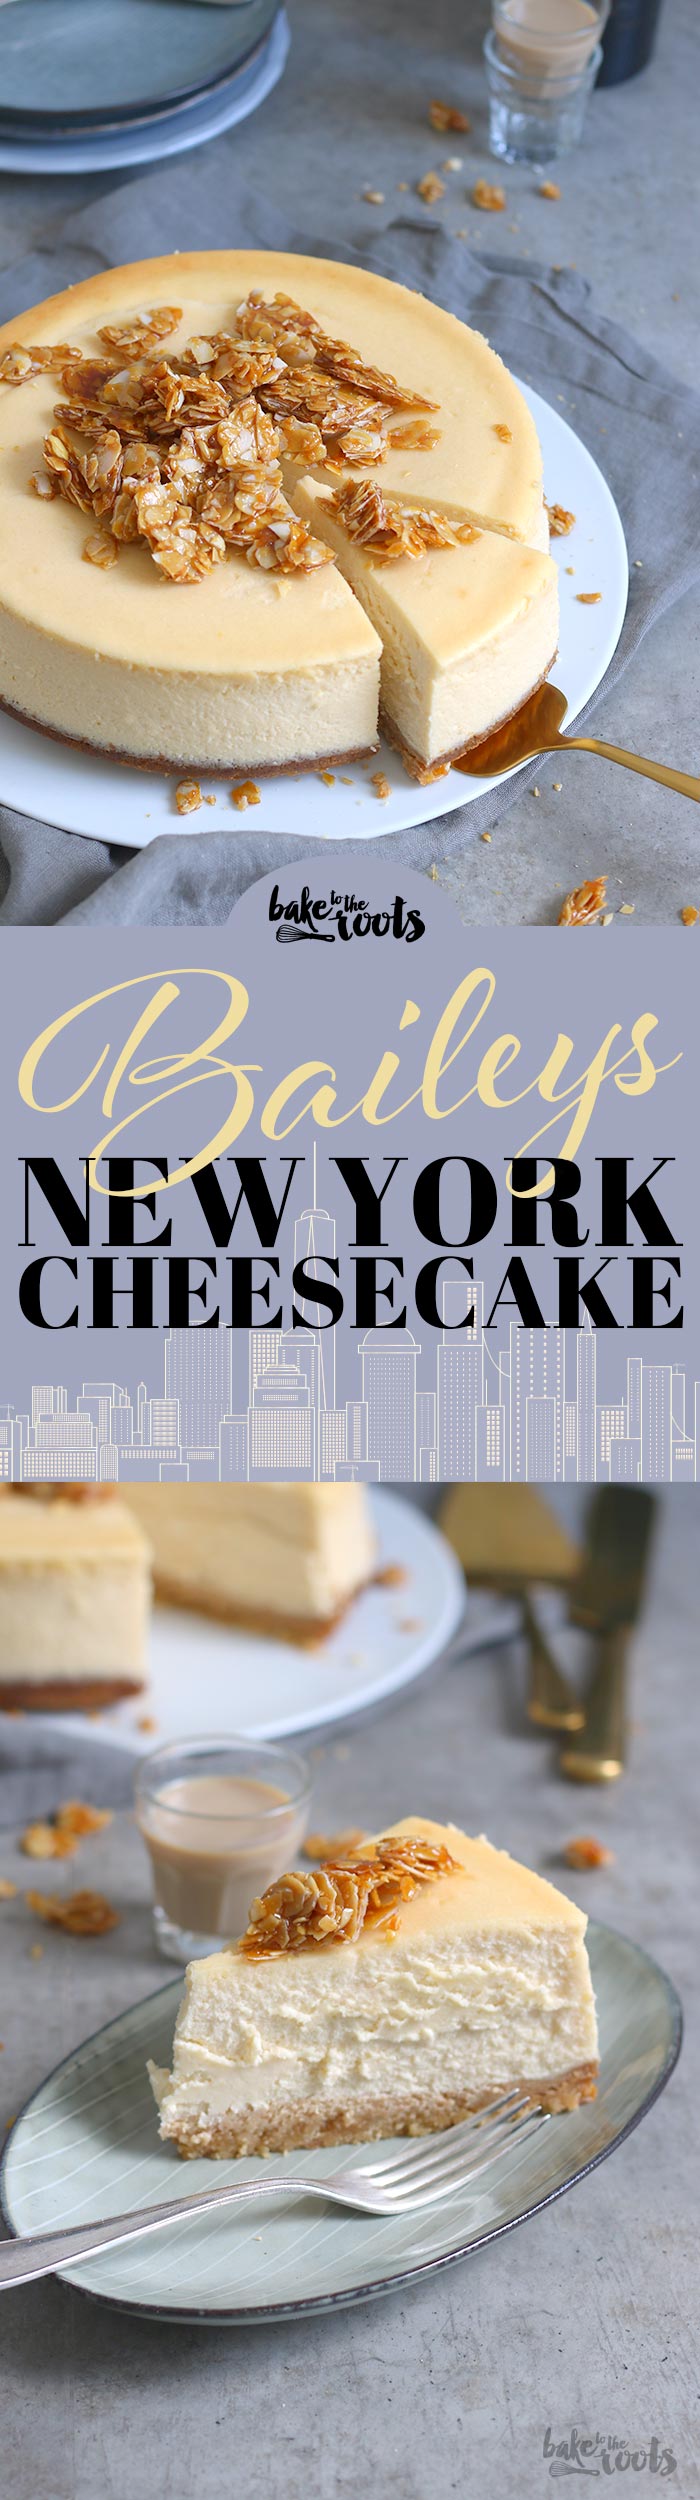 Baileys NY Cheesecake | Bake to the roots